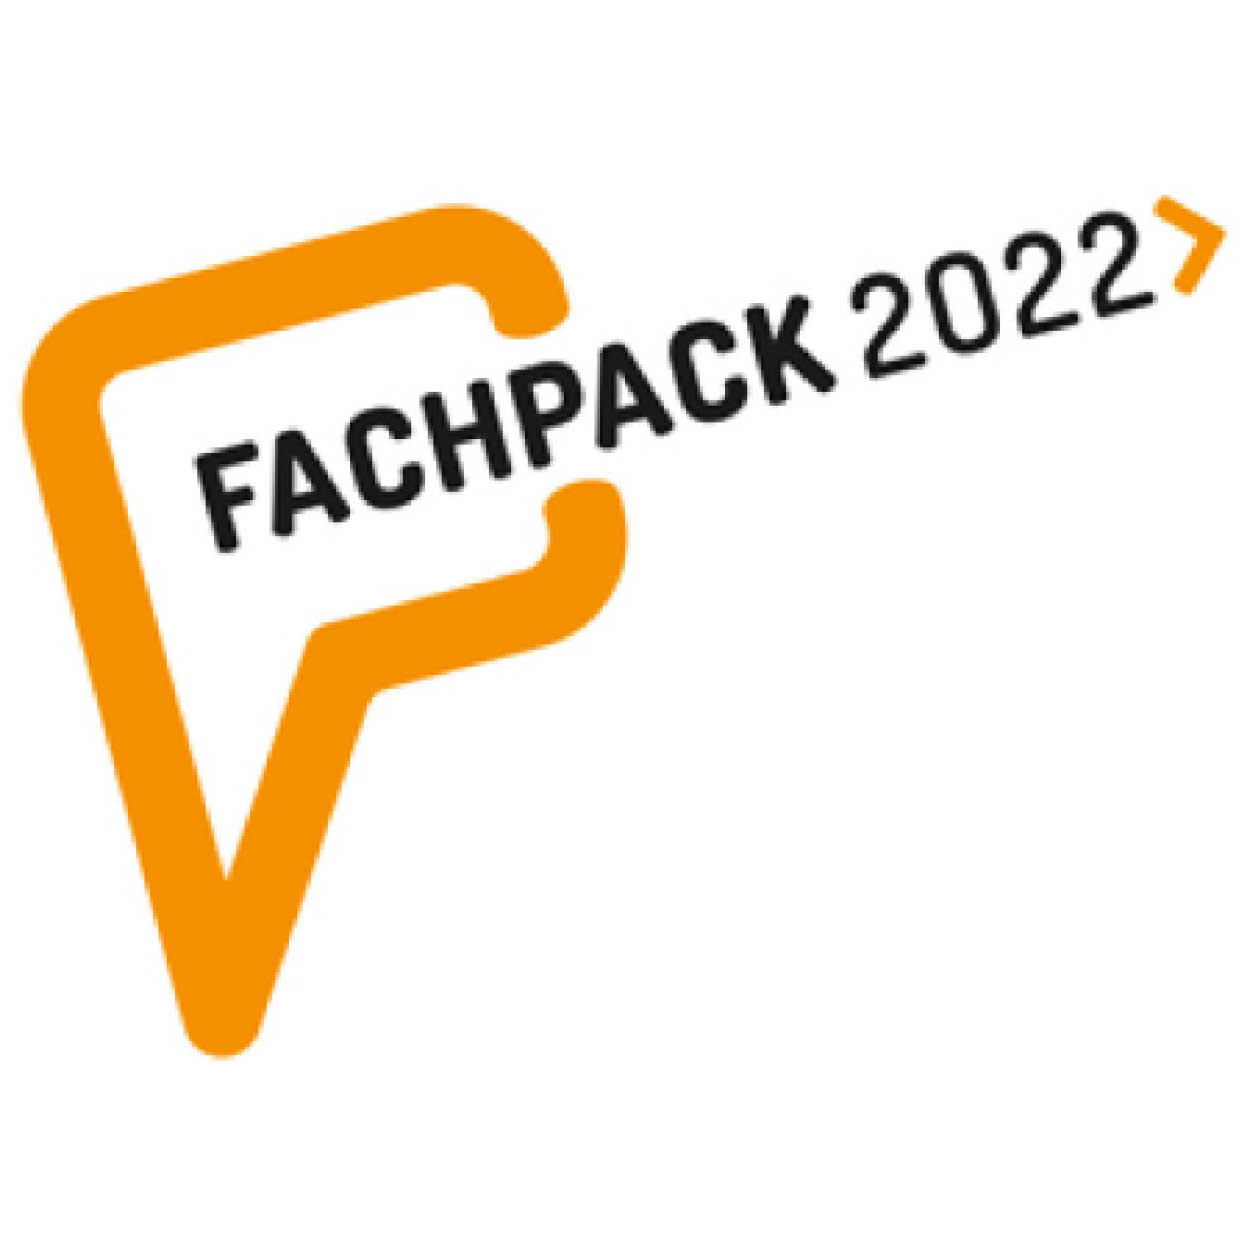 Fach Pack Logo